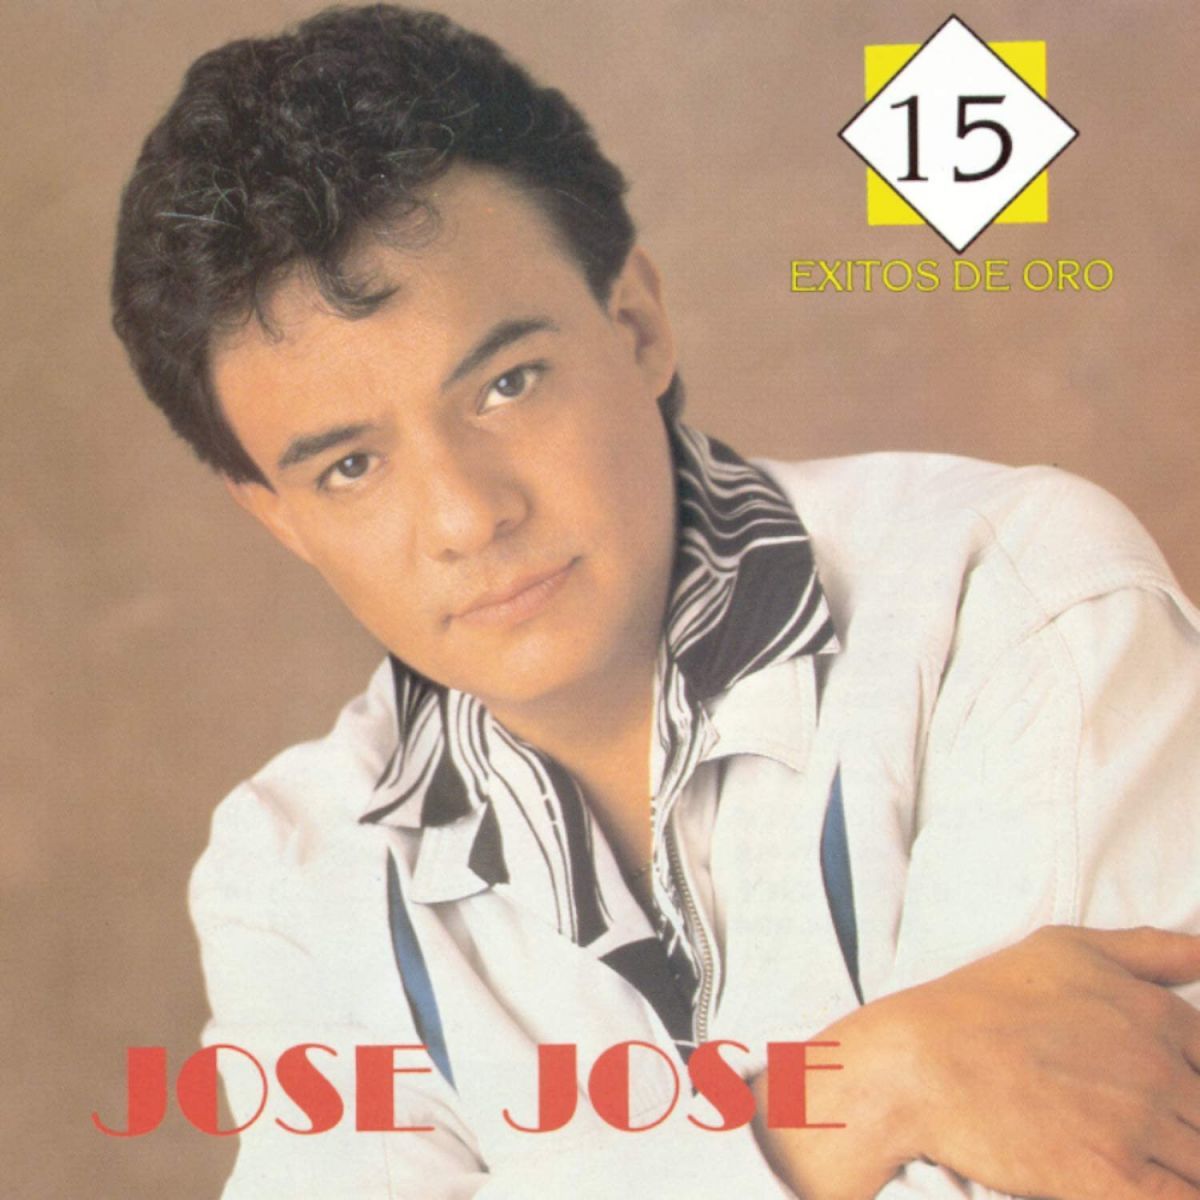  рис CD Jose Jose 15 Exitos De Oro /00110